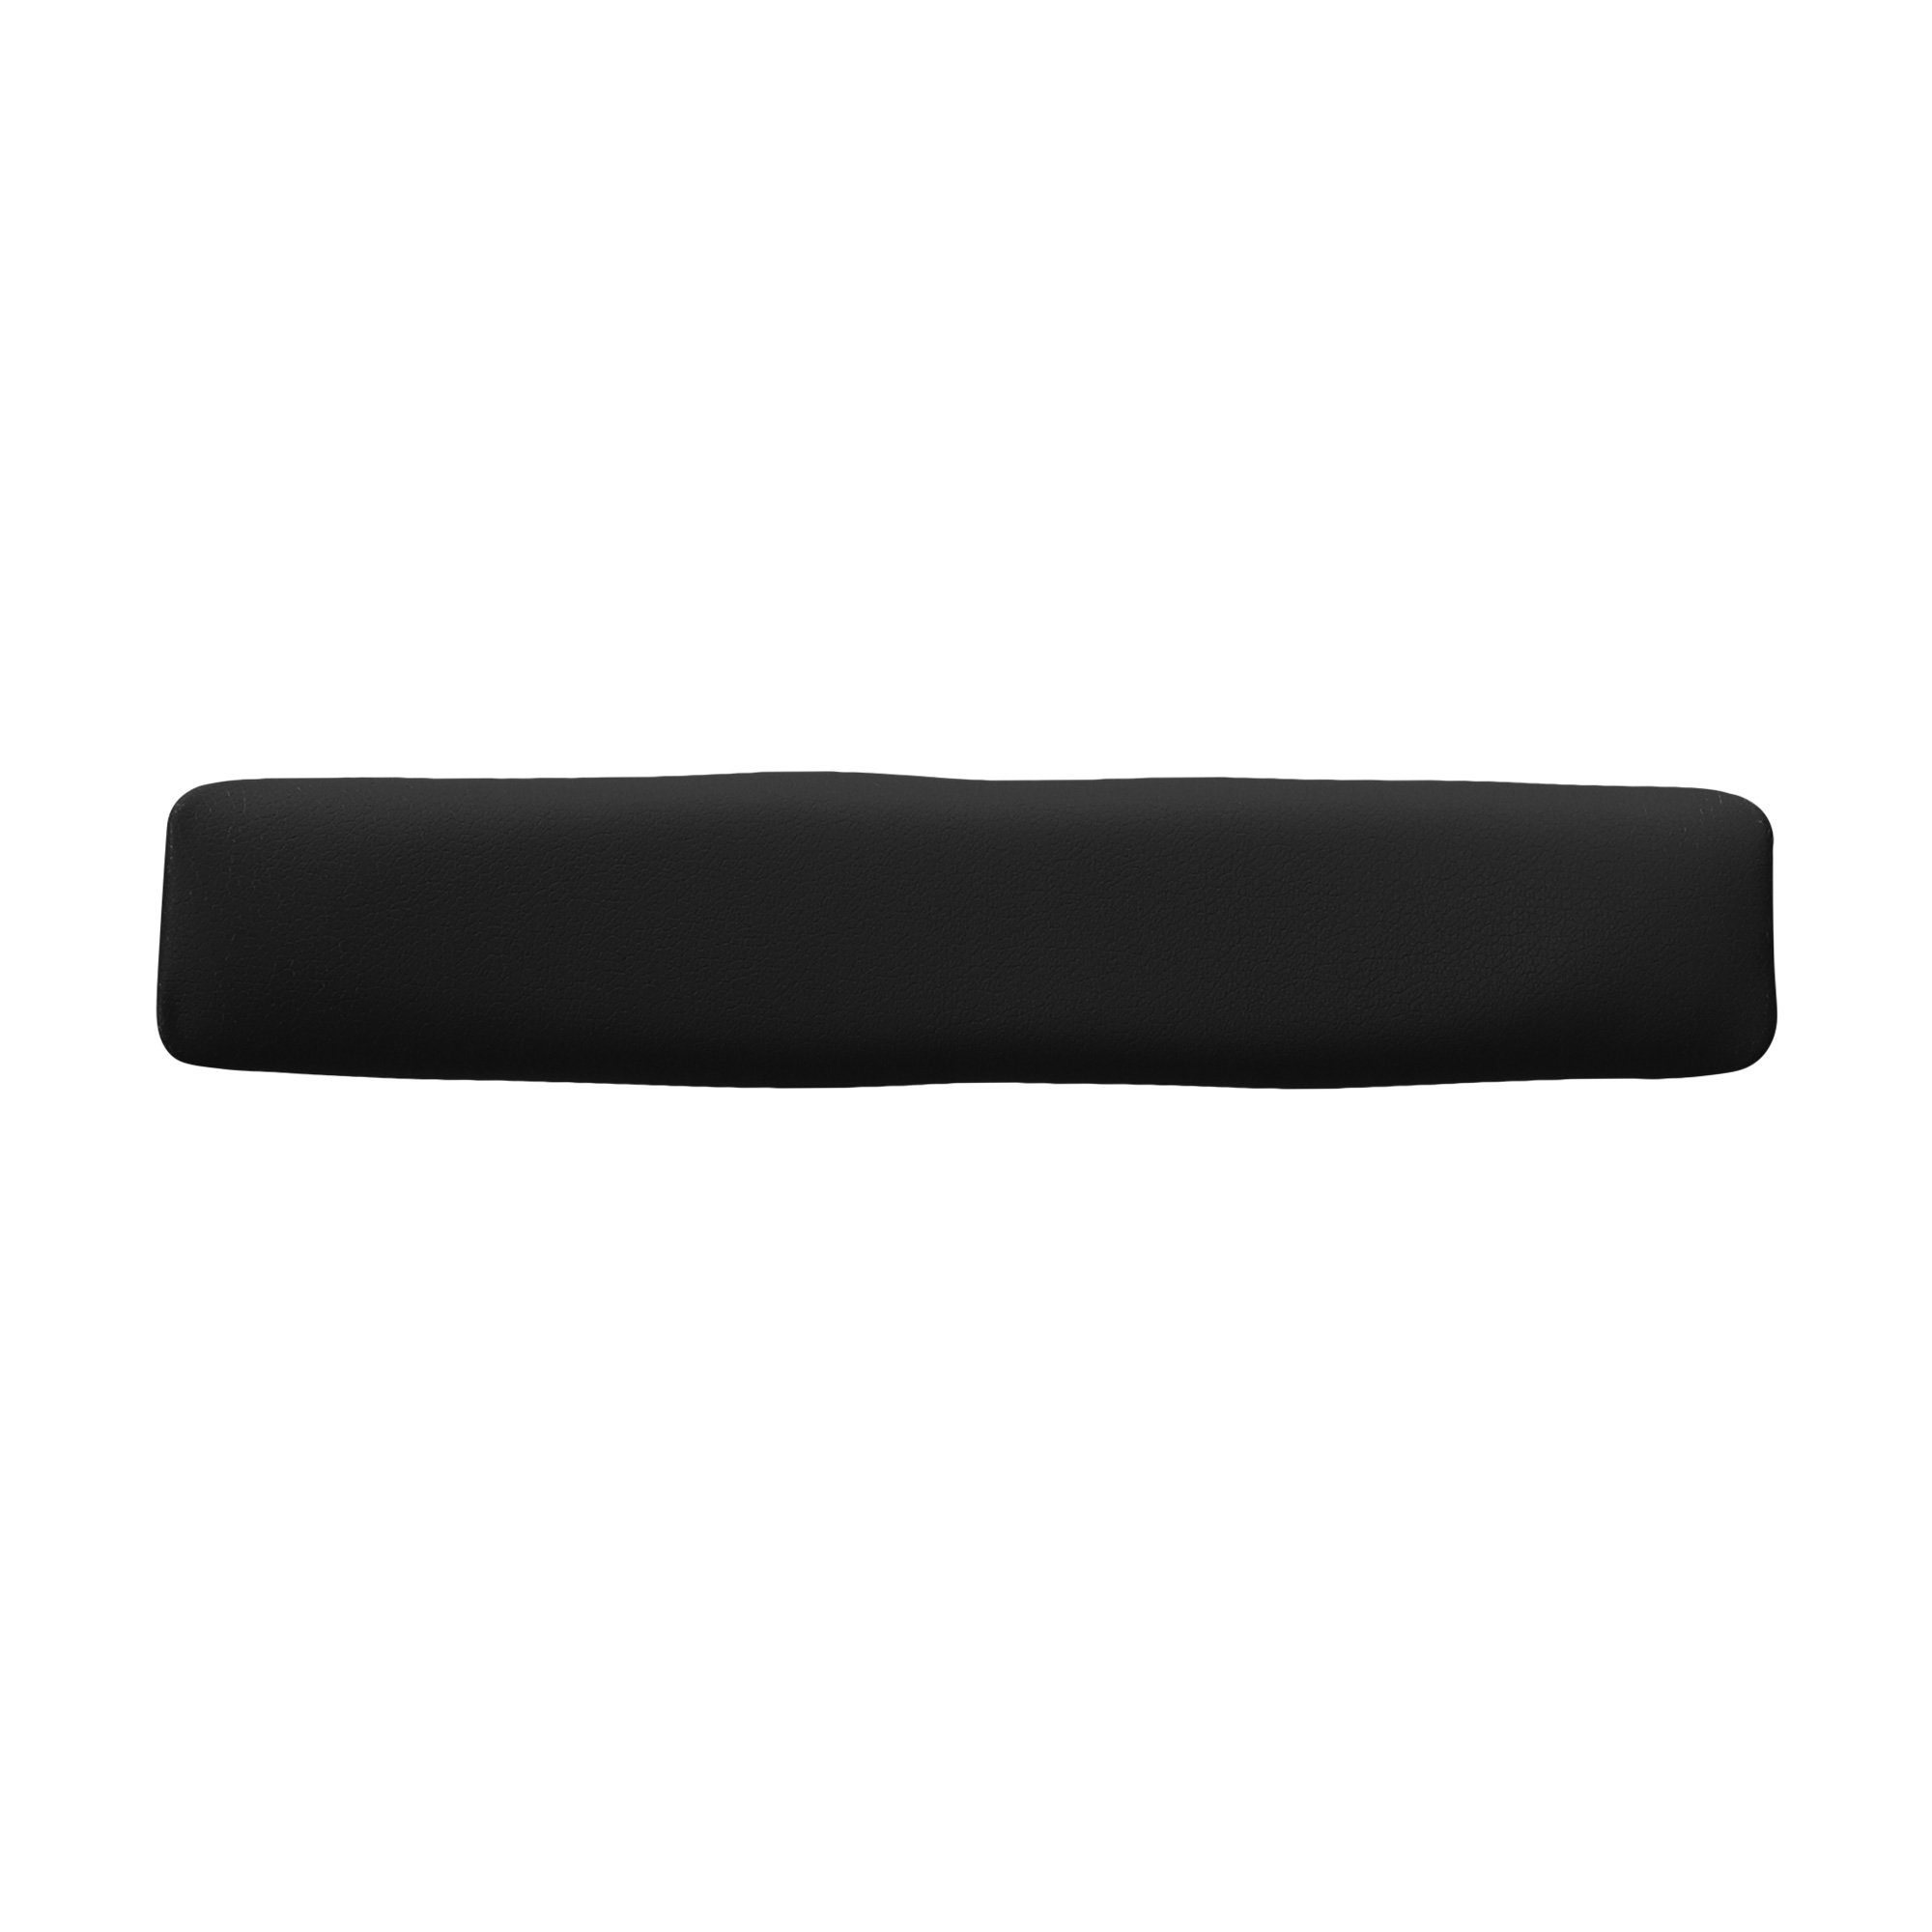 Bügelpolster Bügelpolster für Polster WH-CH520, Kunstleder für Sony kwmobile Headphones Kopfbügel Overear